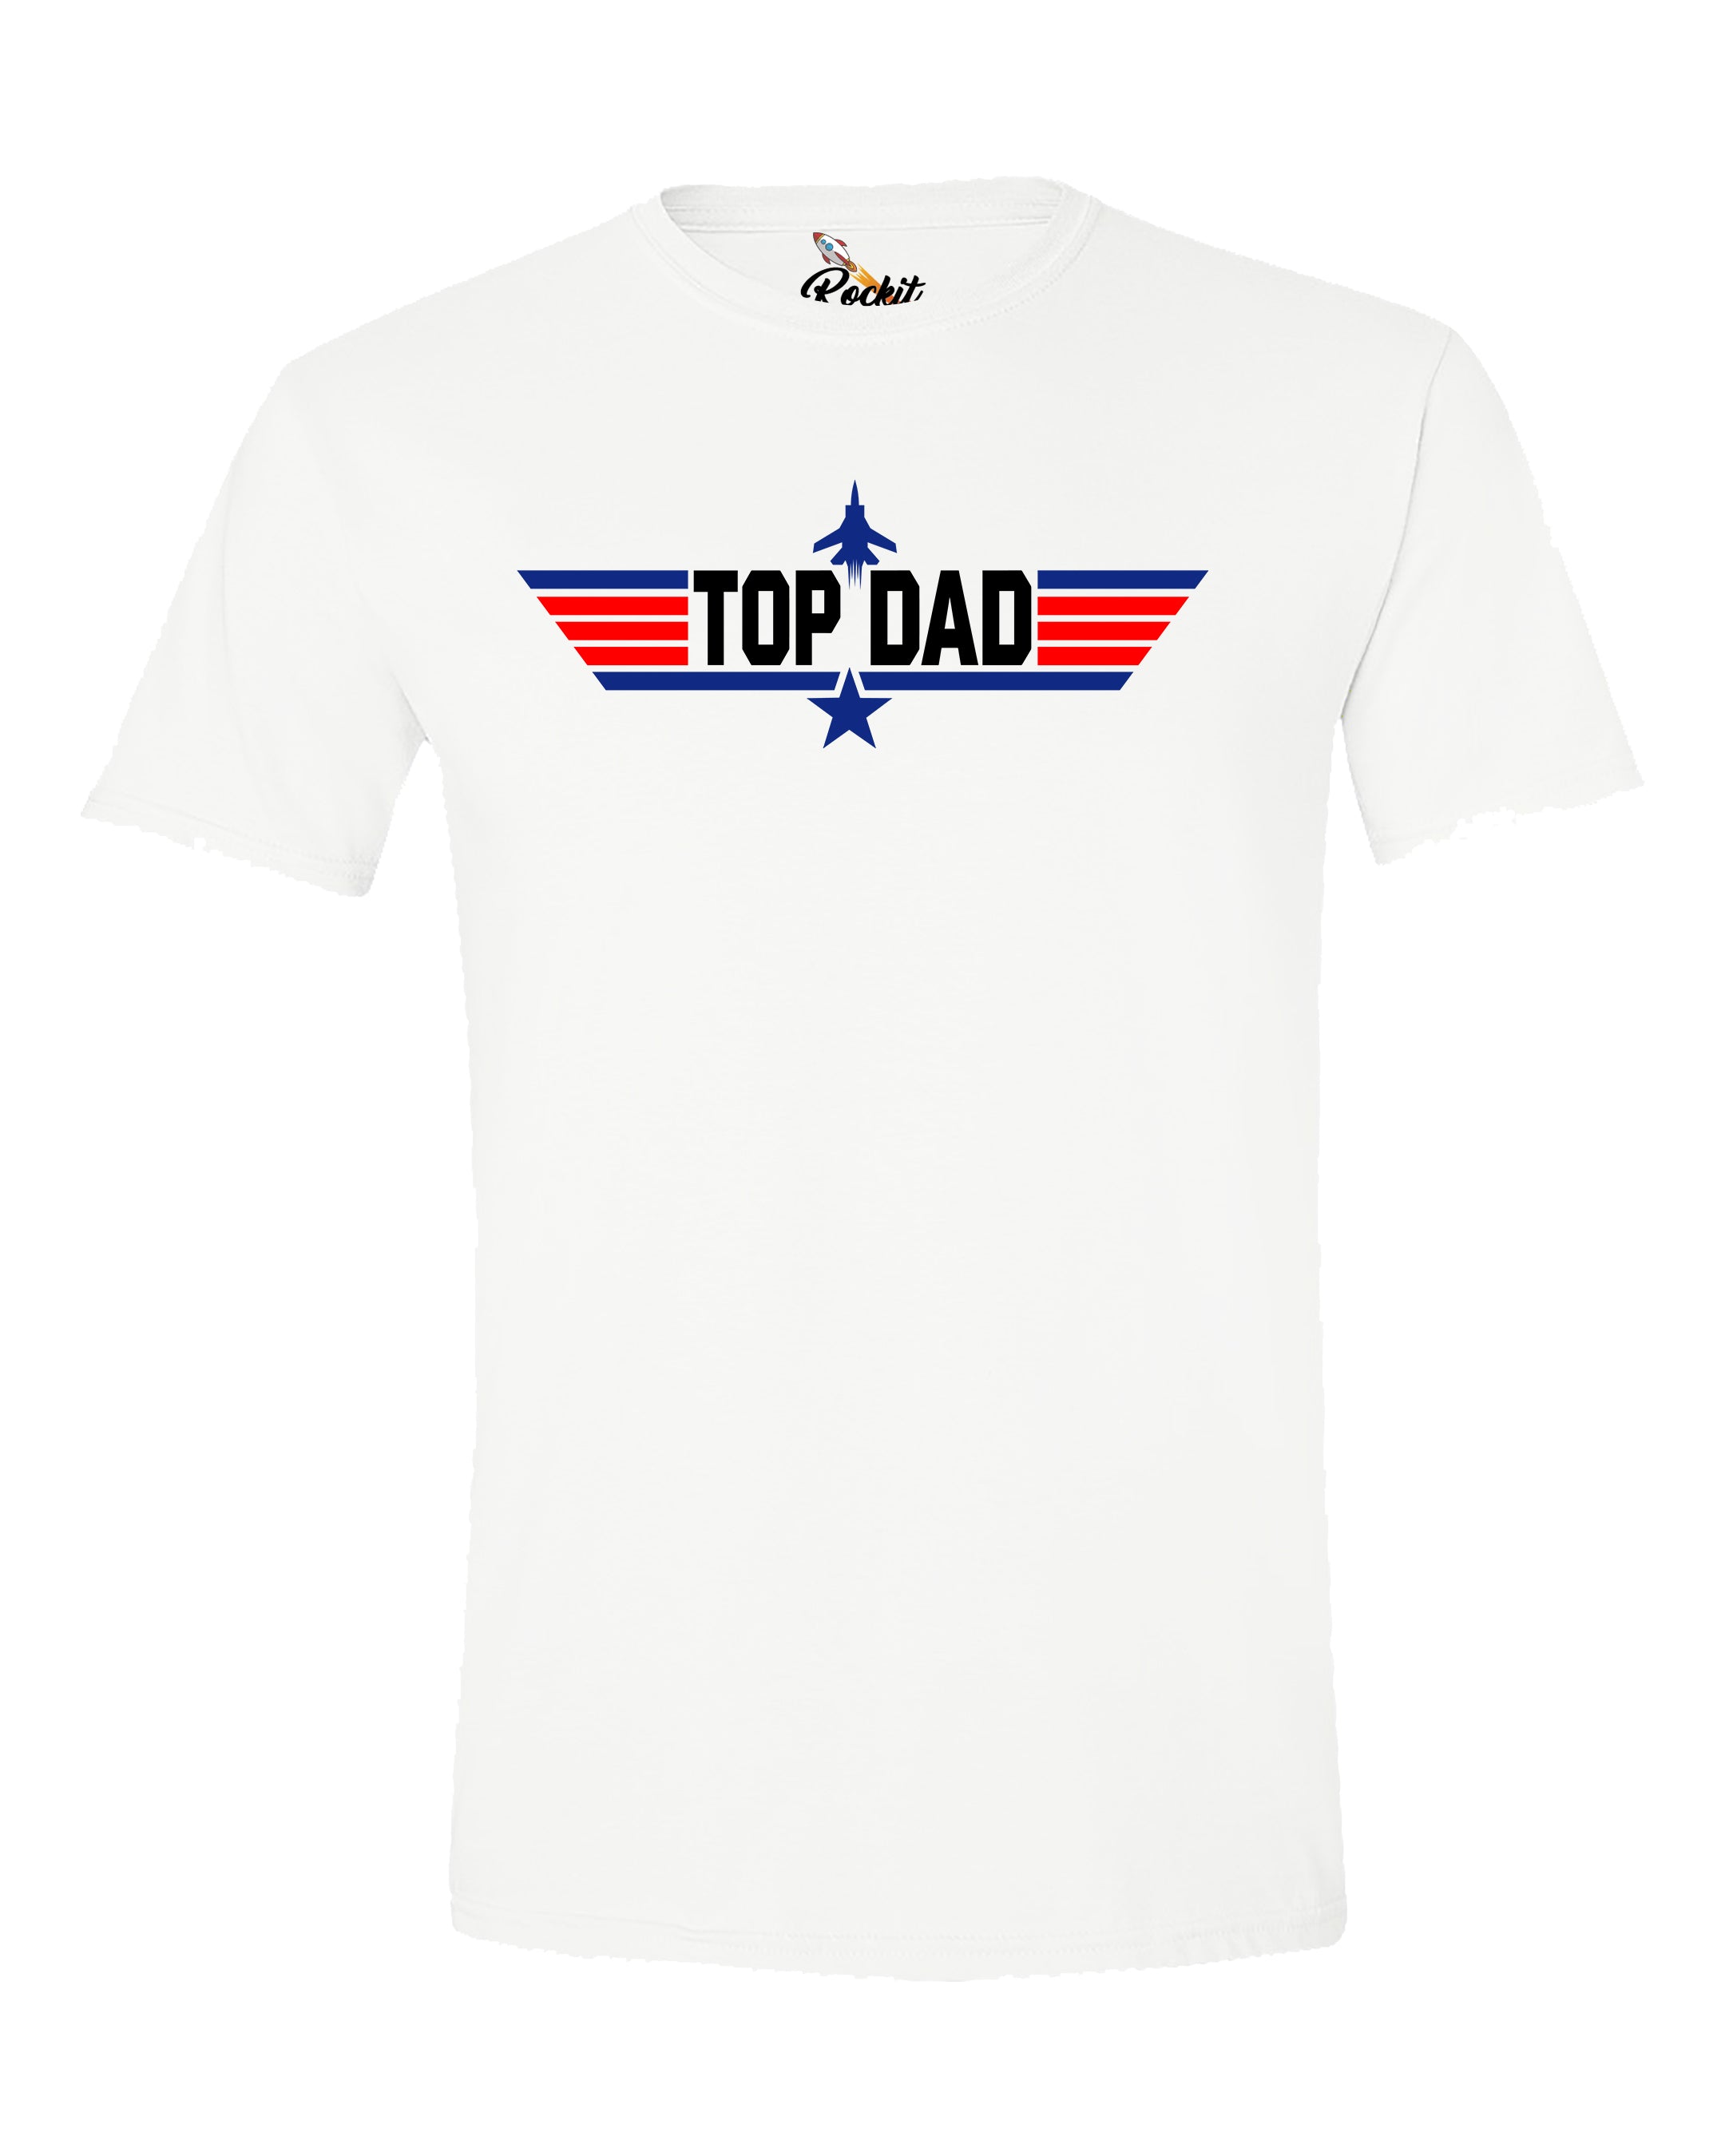 Top Dad Tee